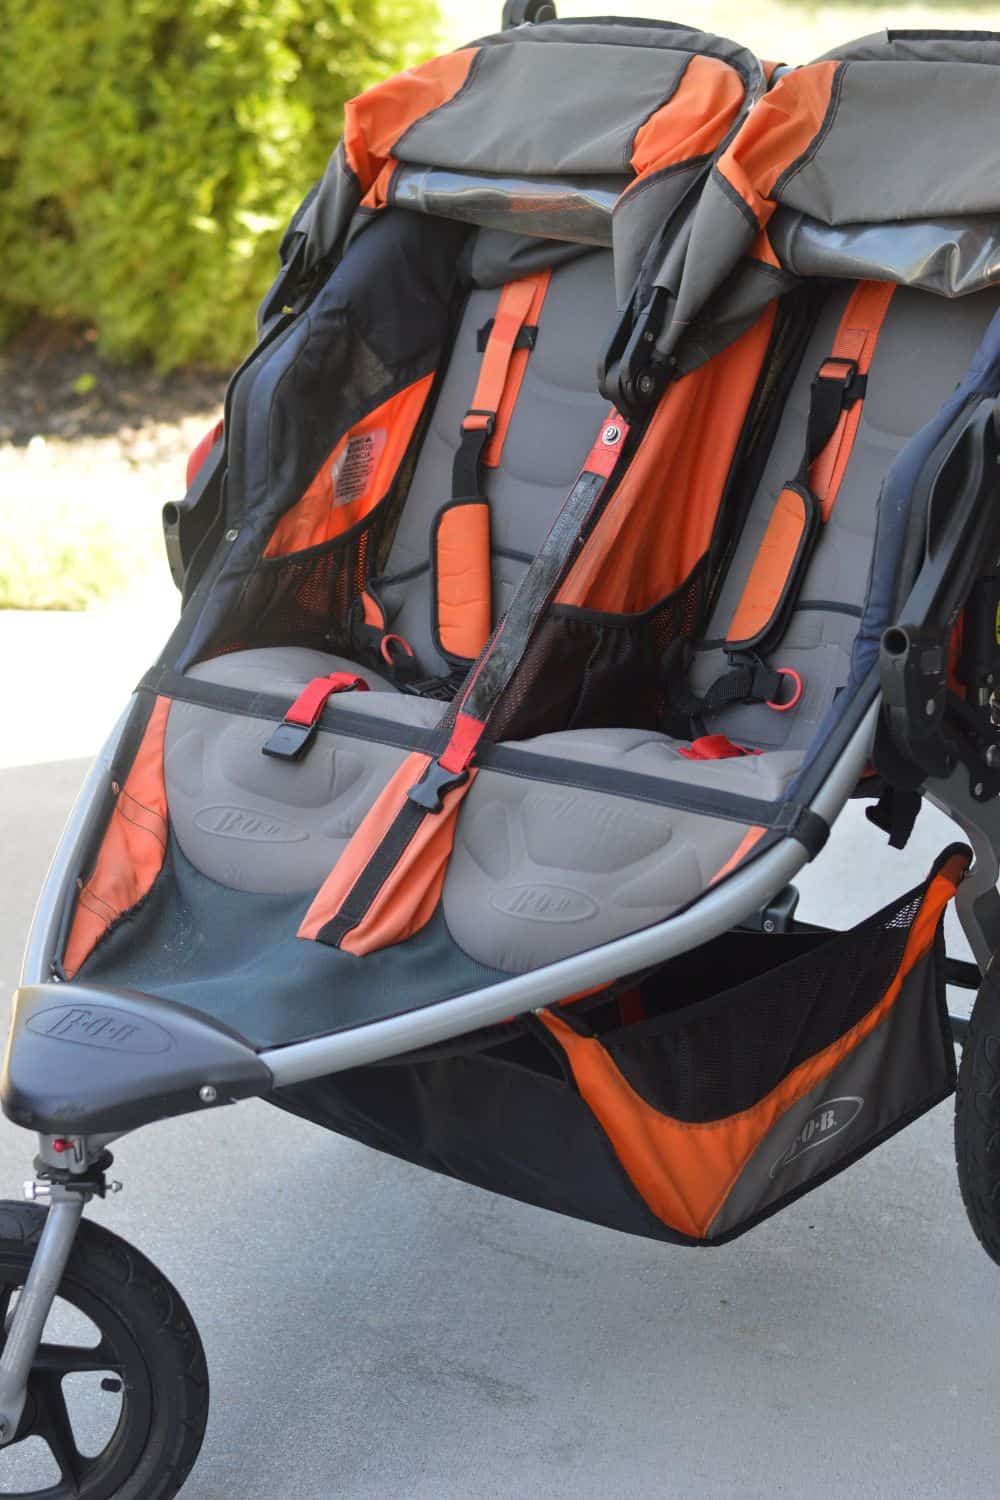 BOB Gear Revolution Flex 3.0 double jogging stroller in burnt orange and black design.